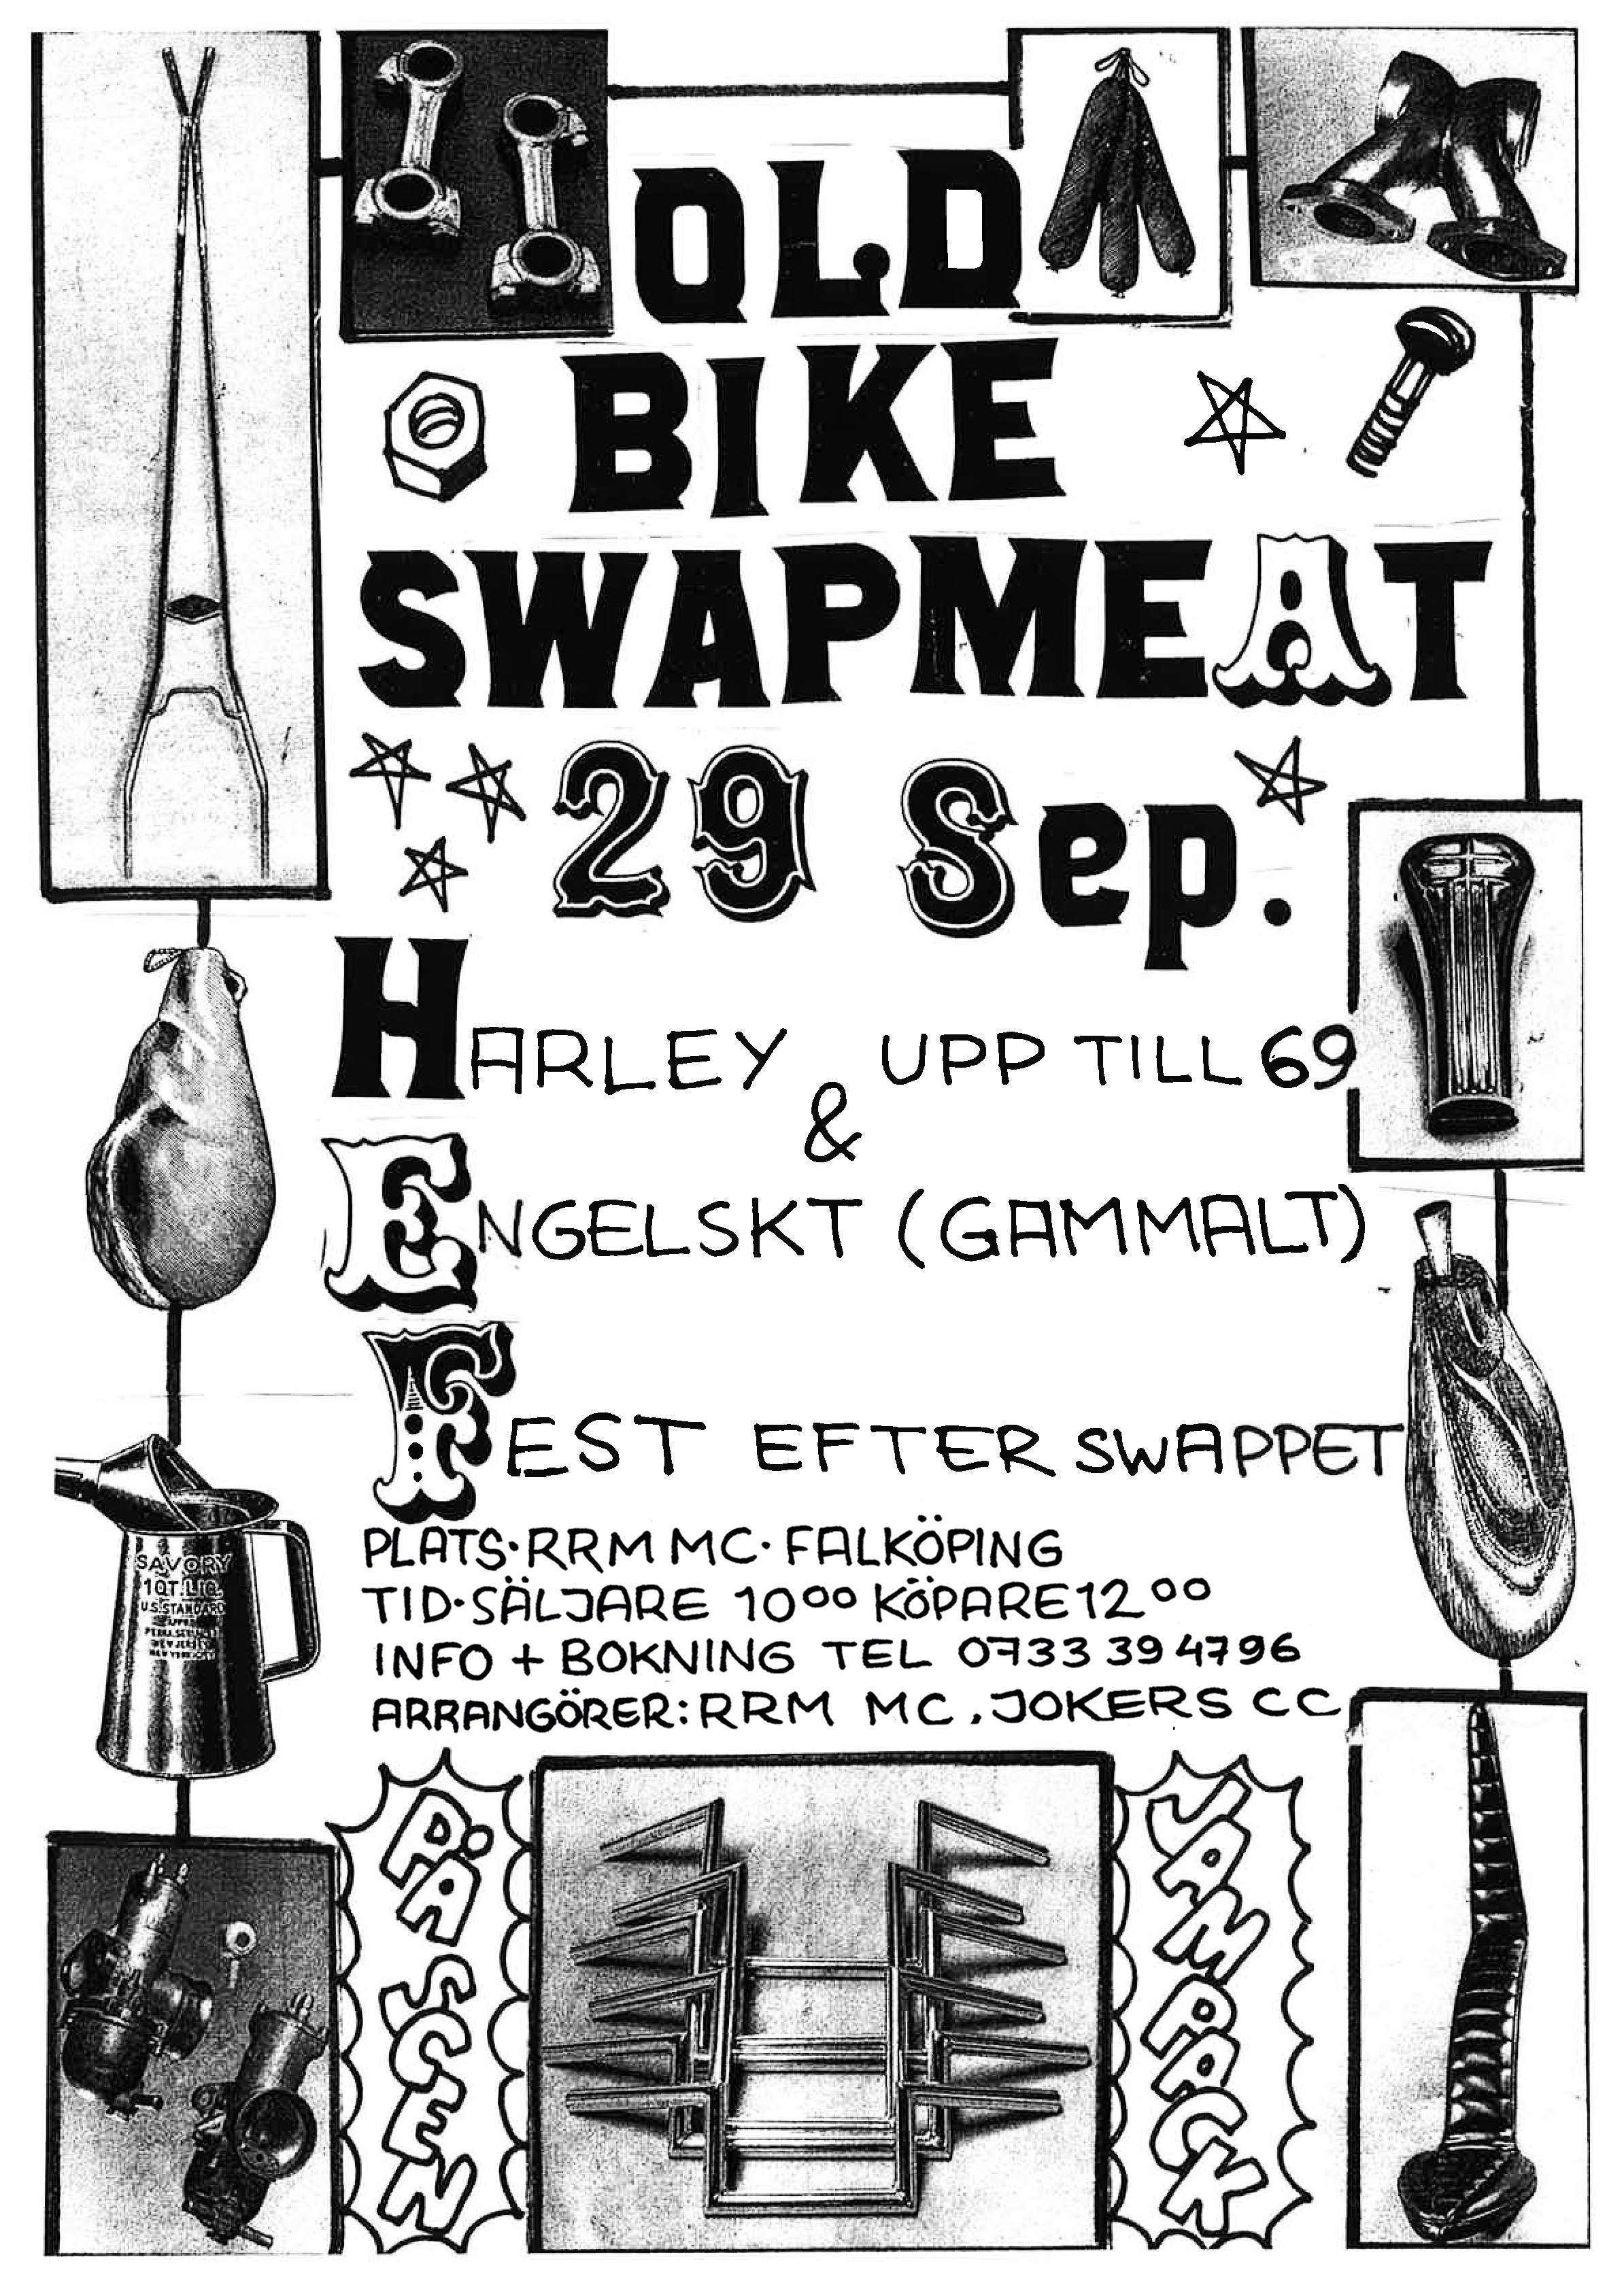 Old Bike Swapmeat 2012